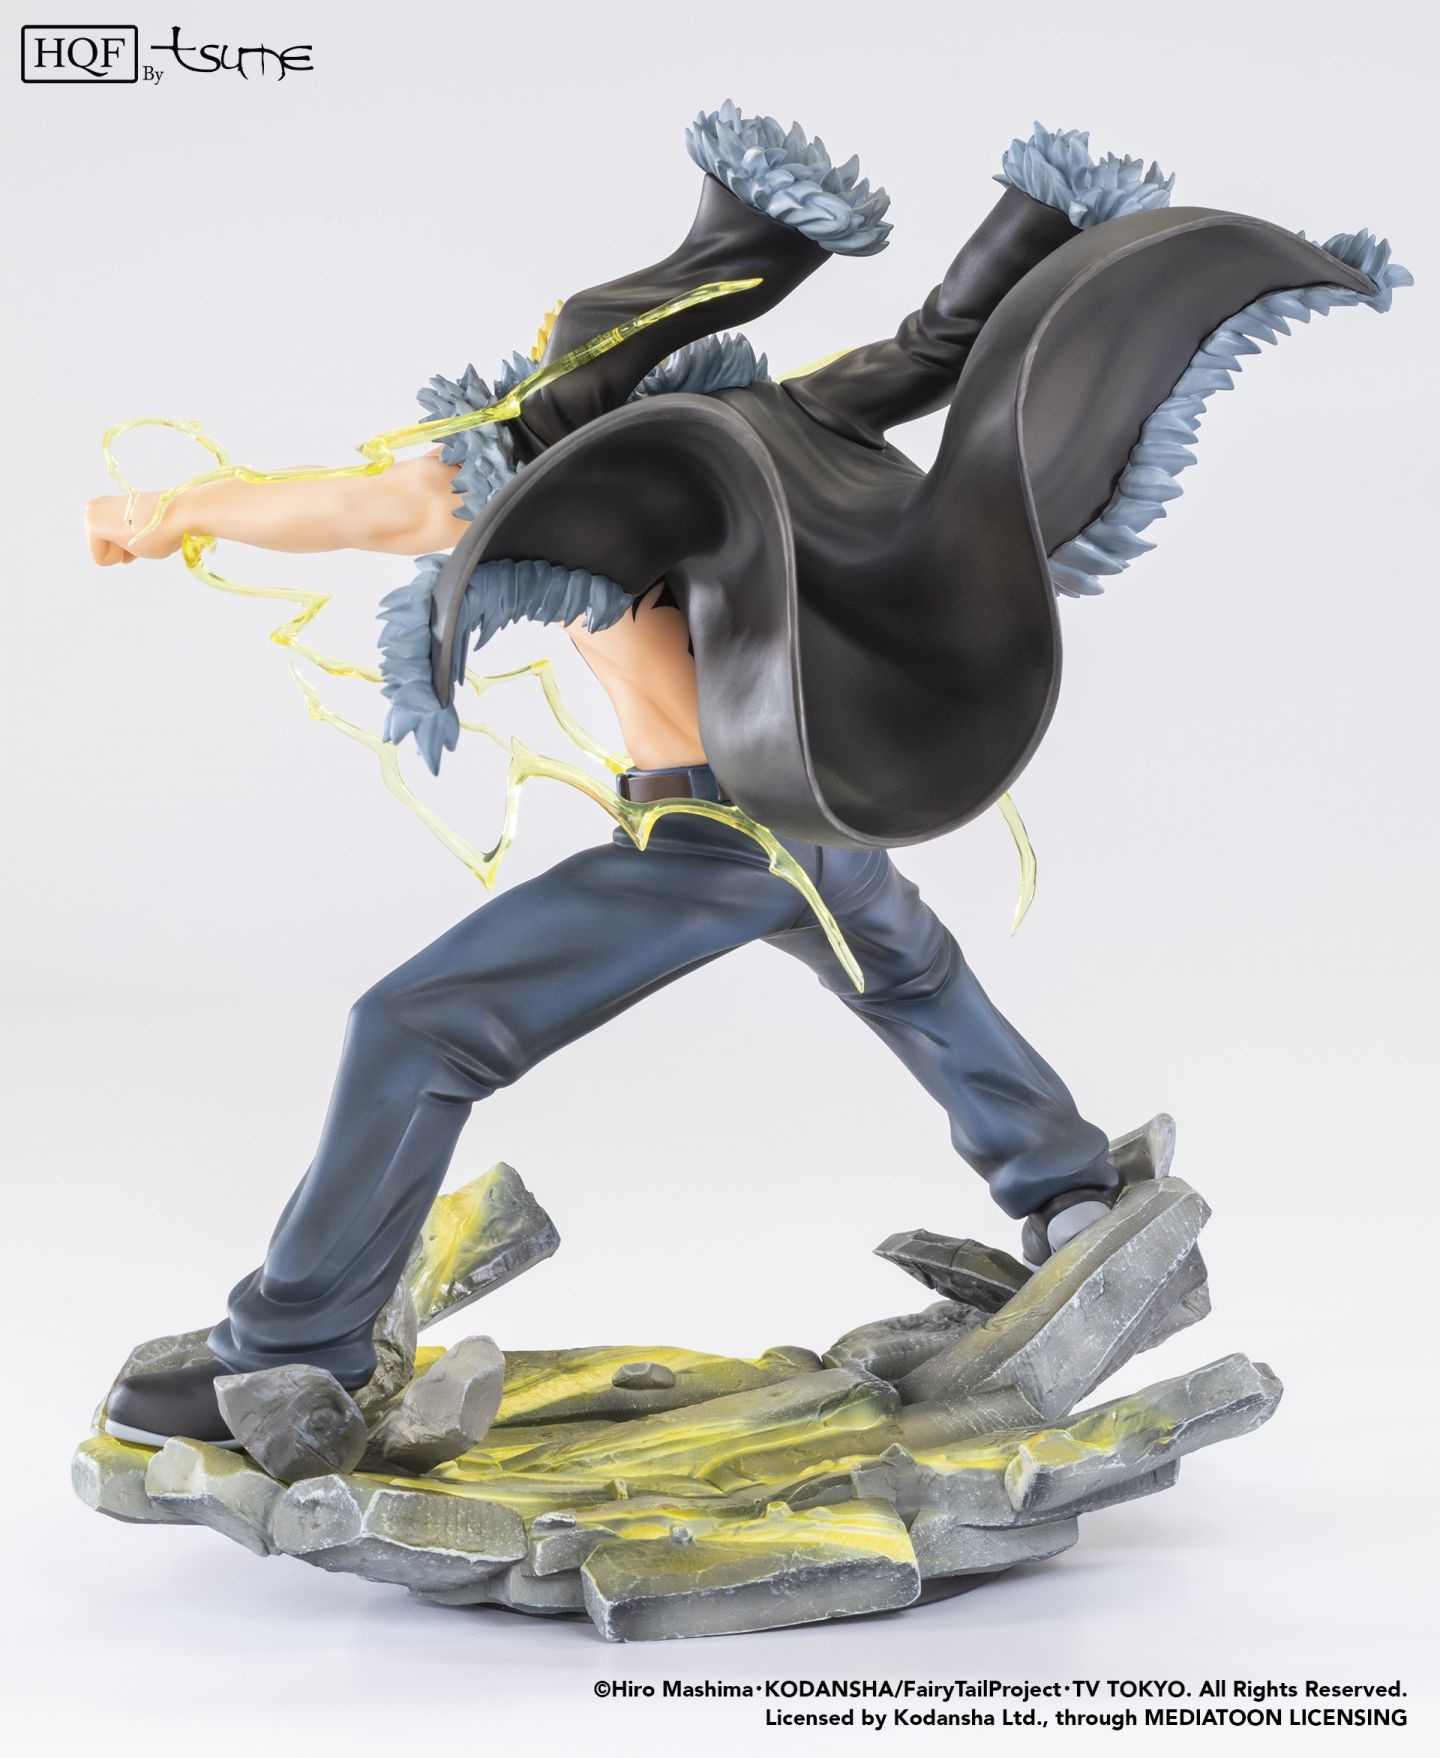 Fairy Tail Tsume Art Hqf ラクサス ドレアー フィギュア登場 Figure News